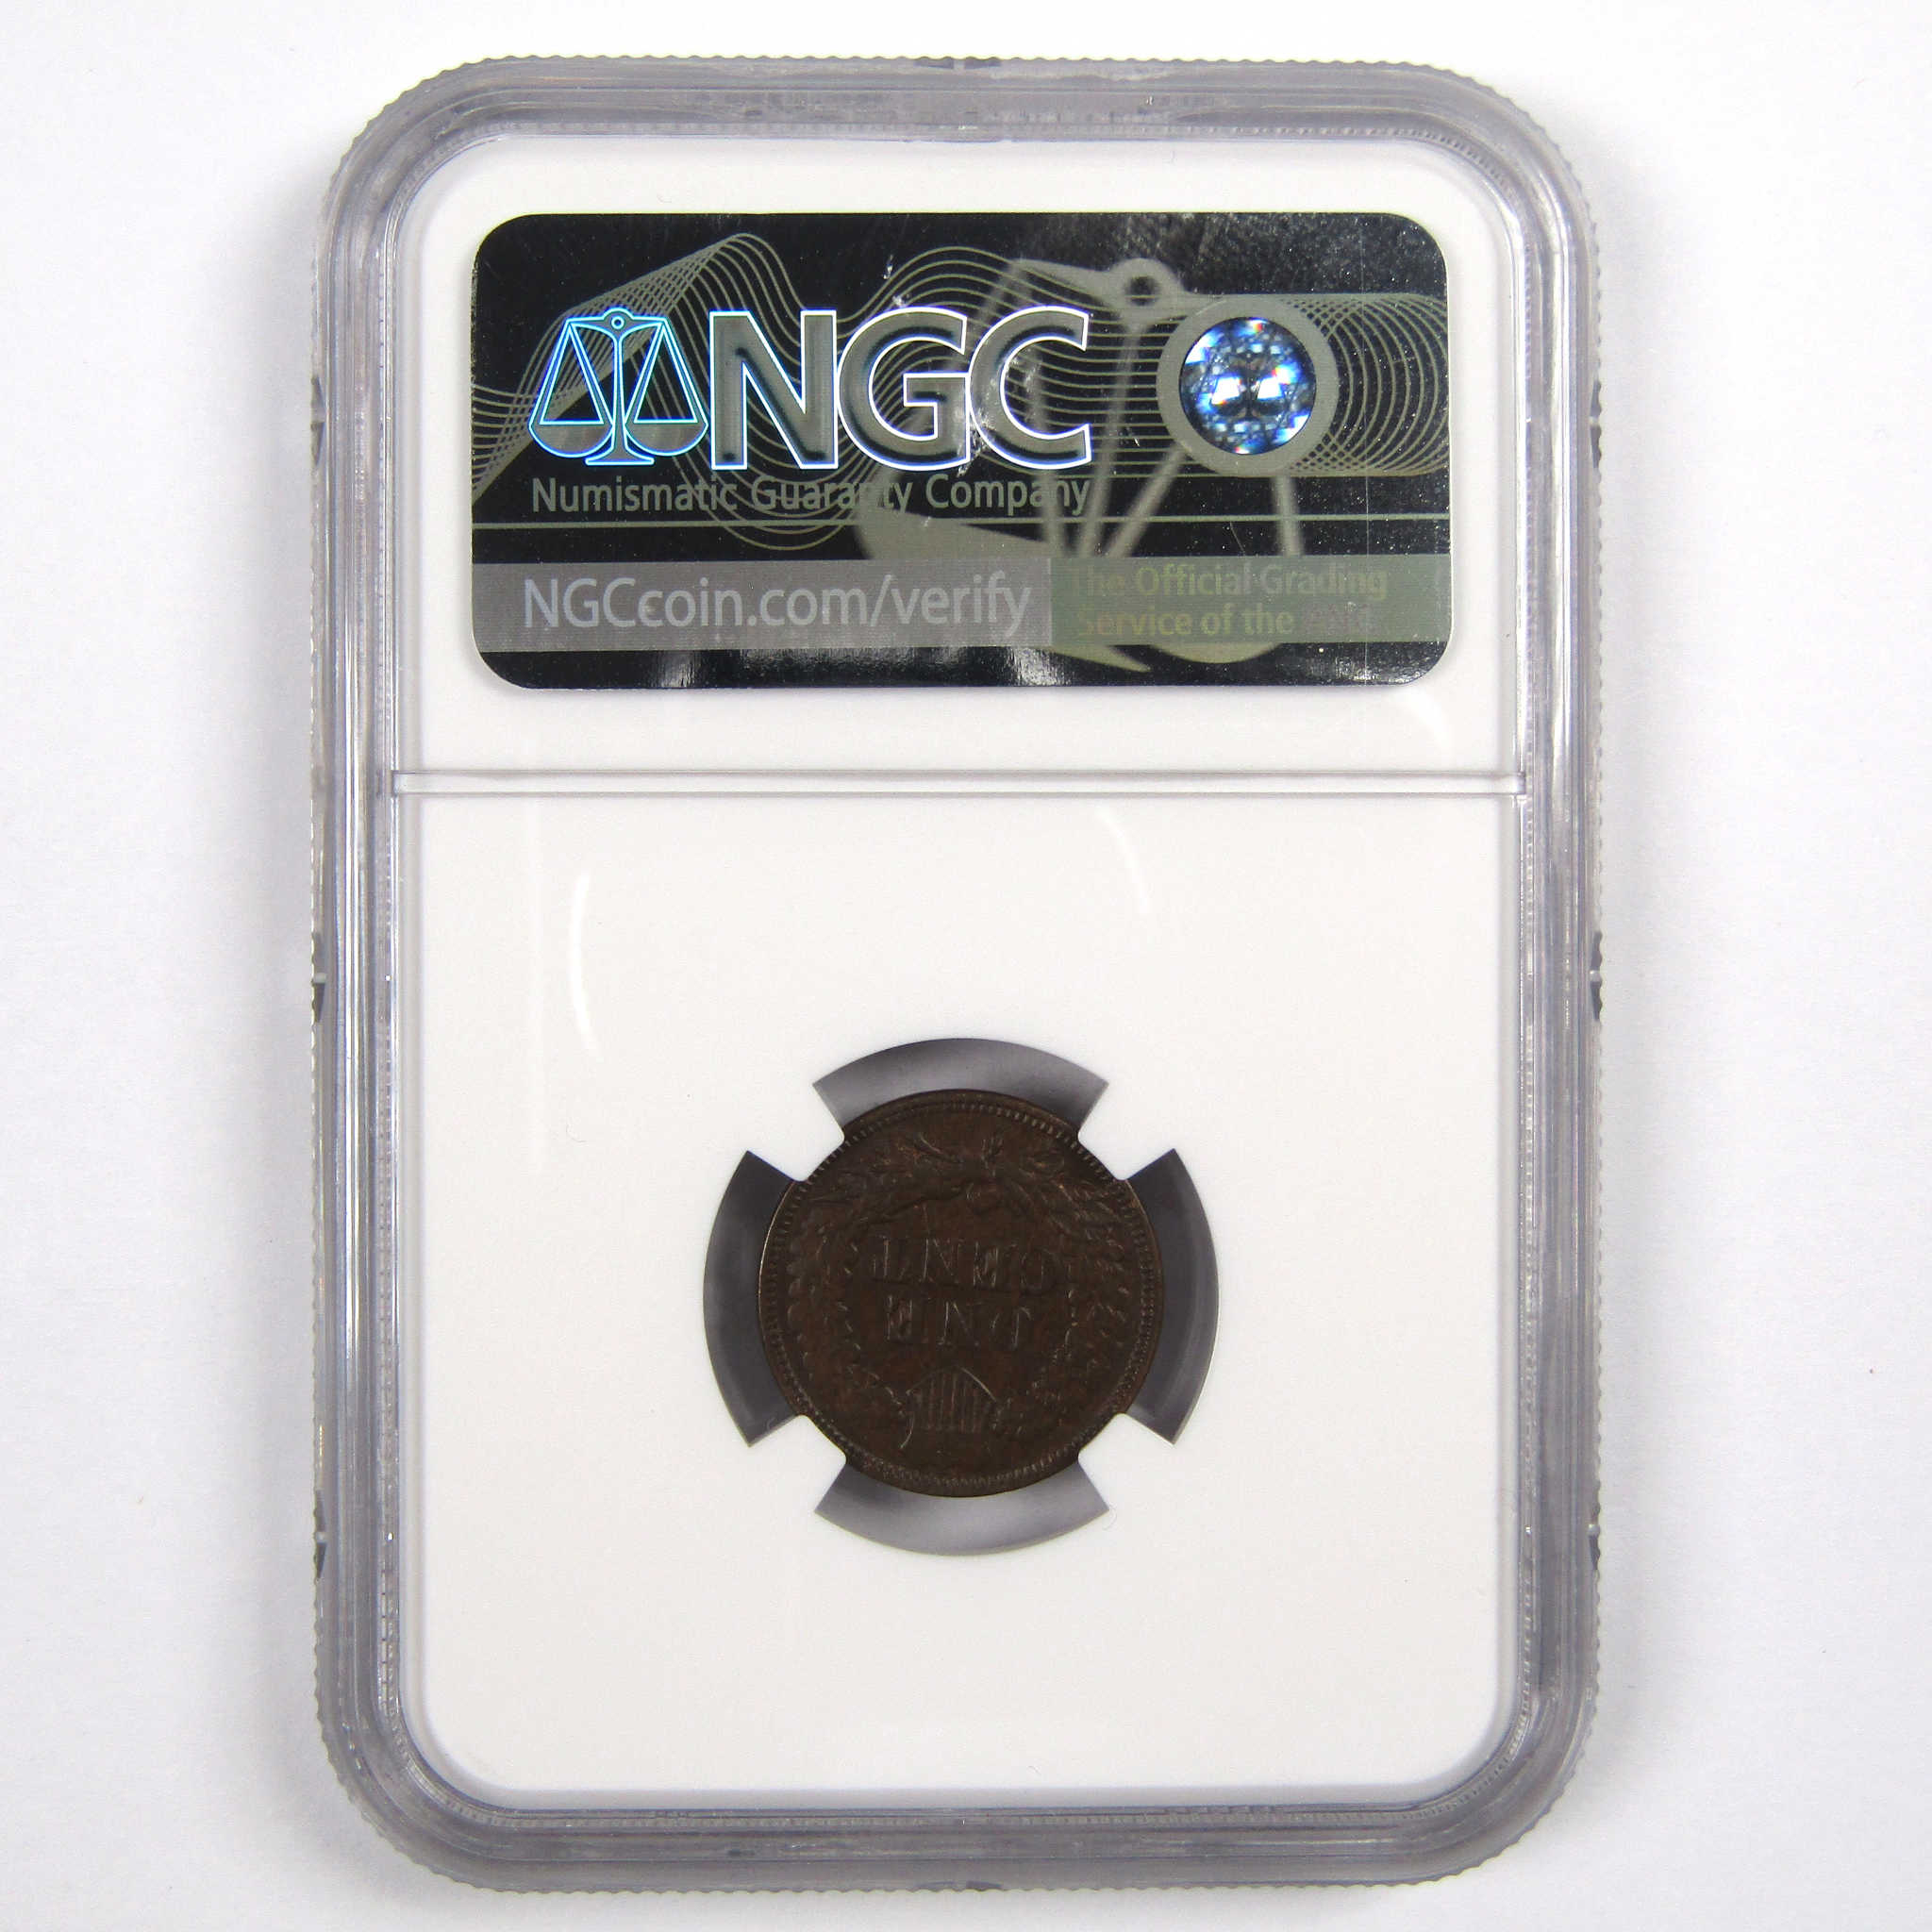 1872 Indian Head Cent AU 55 BN NGC Penny 1c Coin SKU:I7930